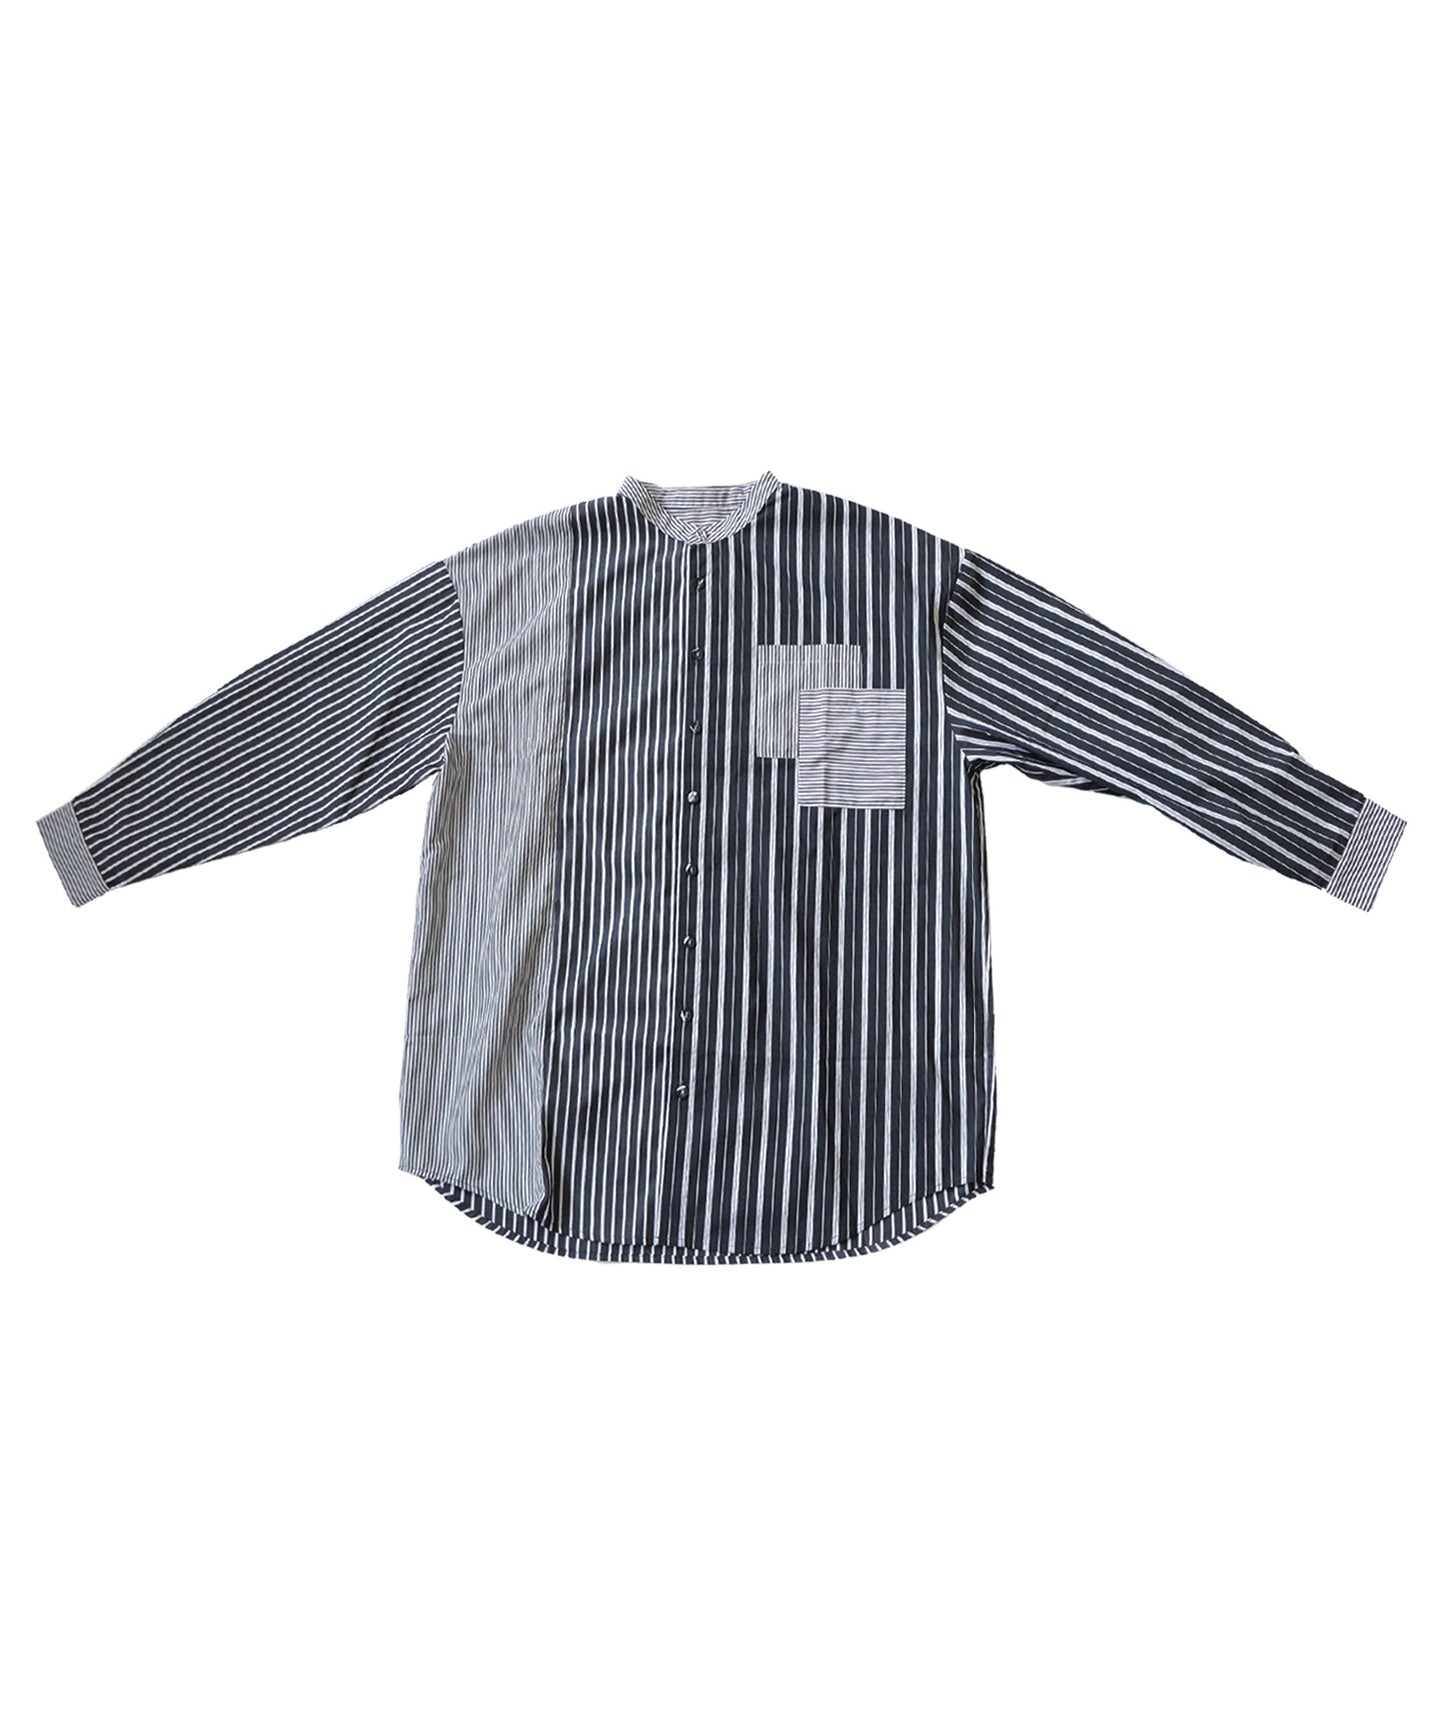 Striped Pattern Shirt Men's